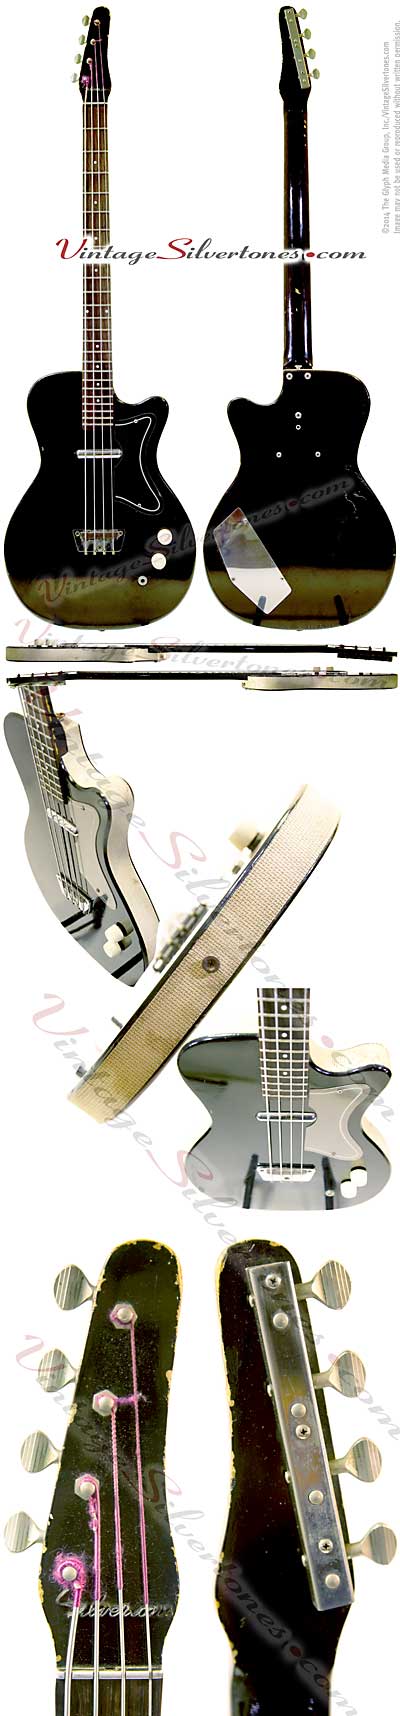 Silvertone Bass made by Danelectro model 1444 - U1 style - single pickup electric bass guitar